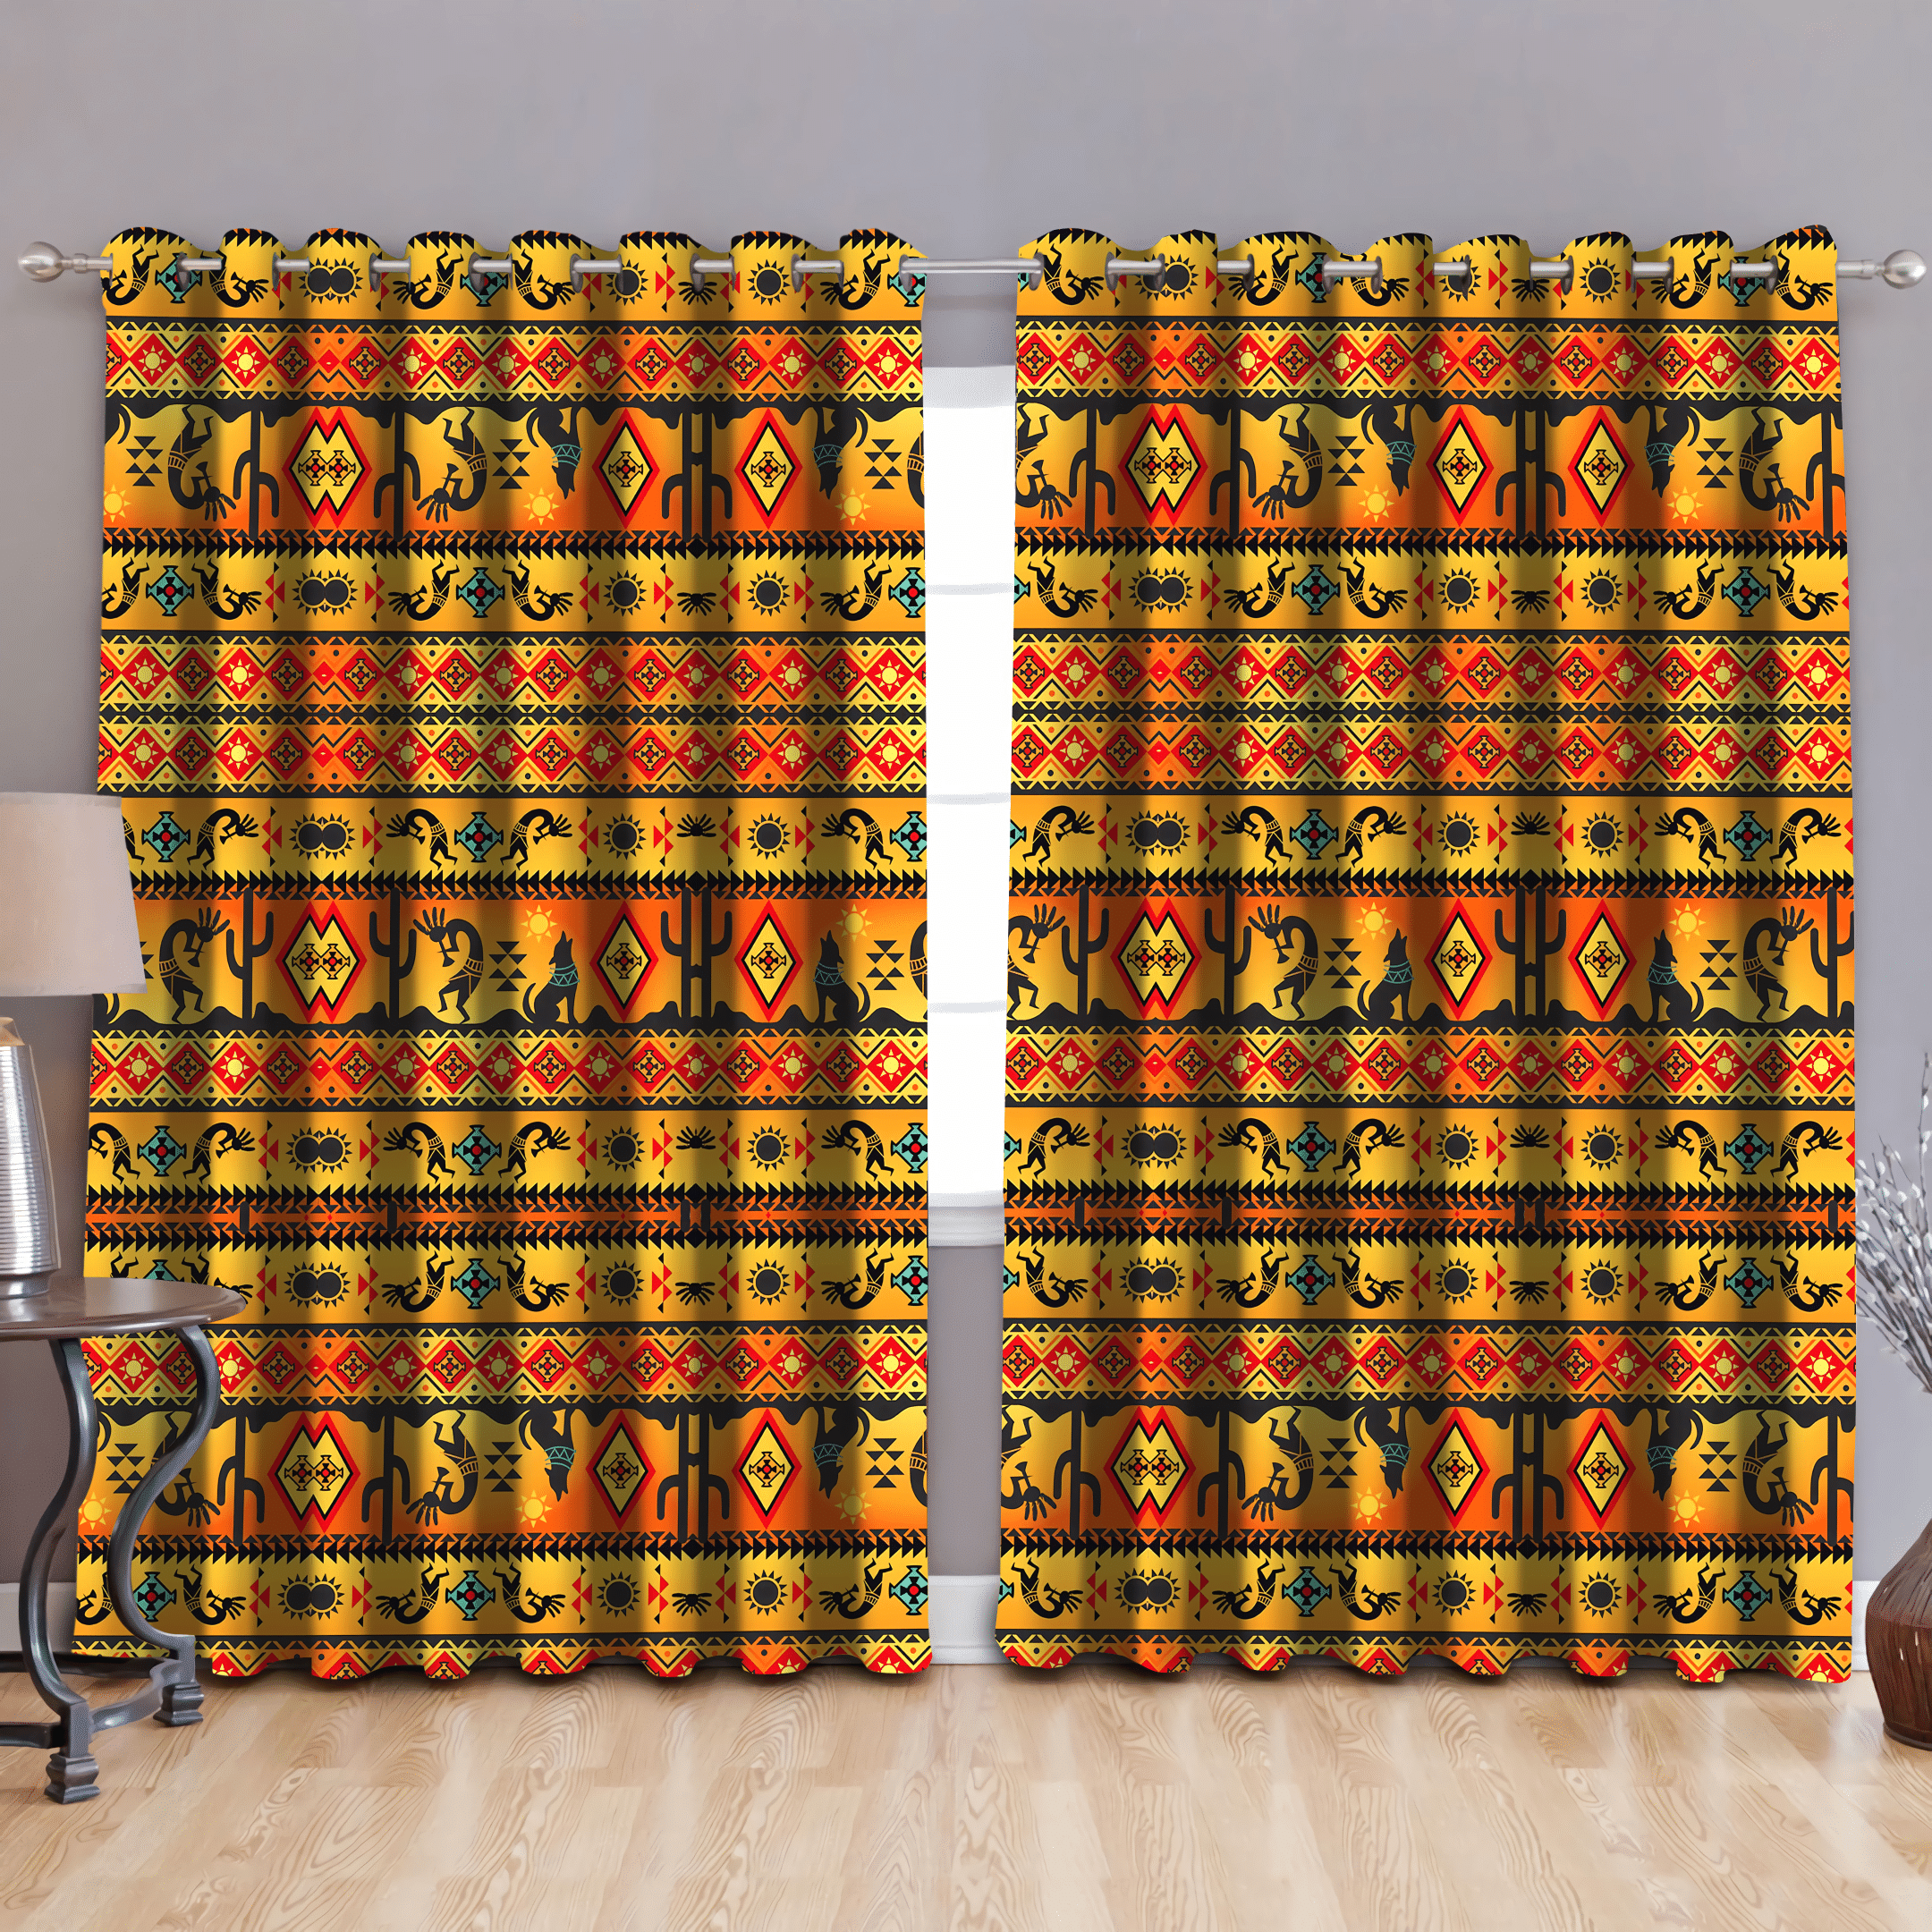 Native American Art Yellow And Orange Background Printed Window Curtain